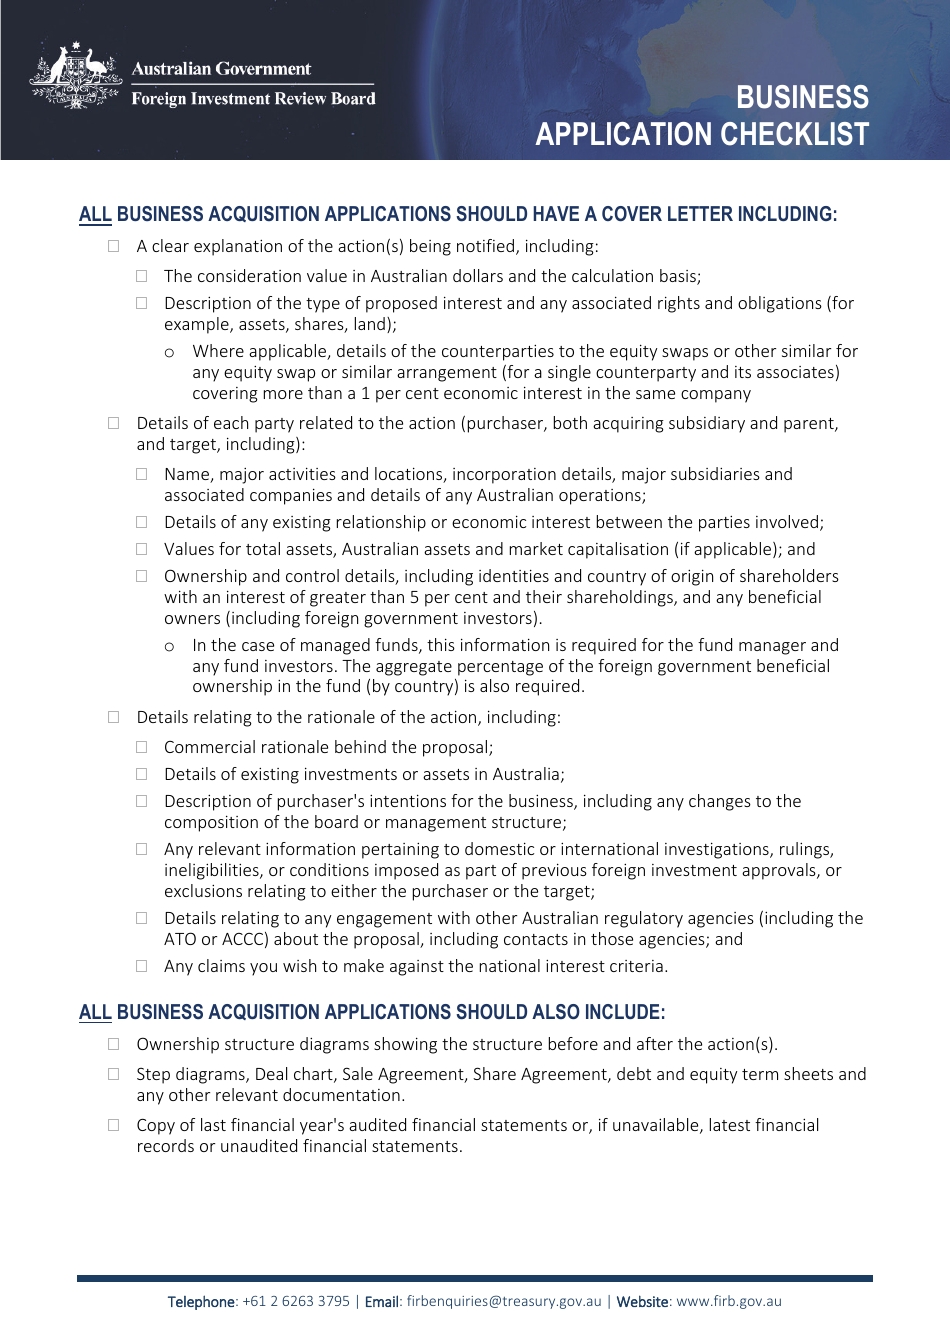 Business Application Checklist Form - Australia, Page 1